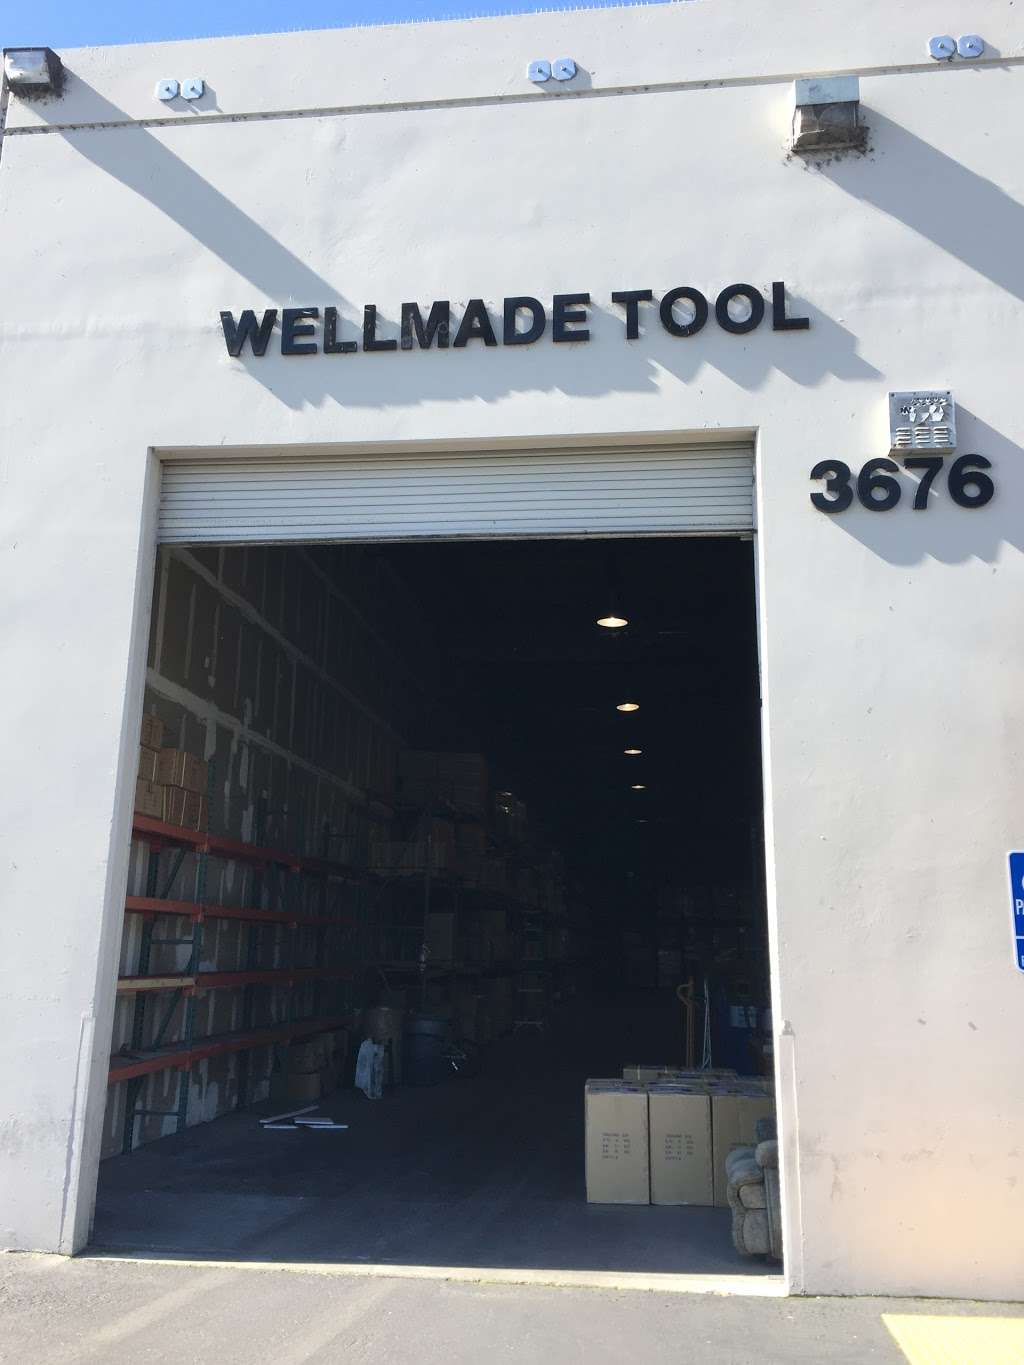 Well Made Tools | 3676 Enterprise Ave, Hayward, CA 94545 | Phone: (510) 887-4448